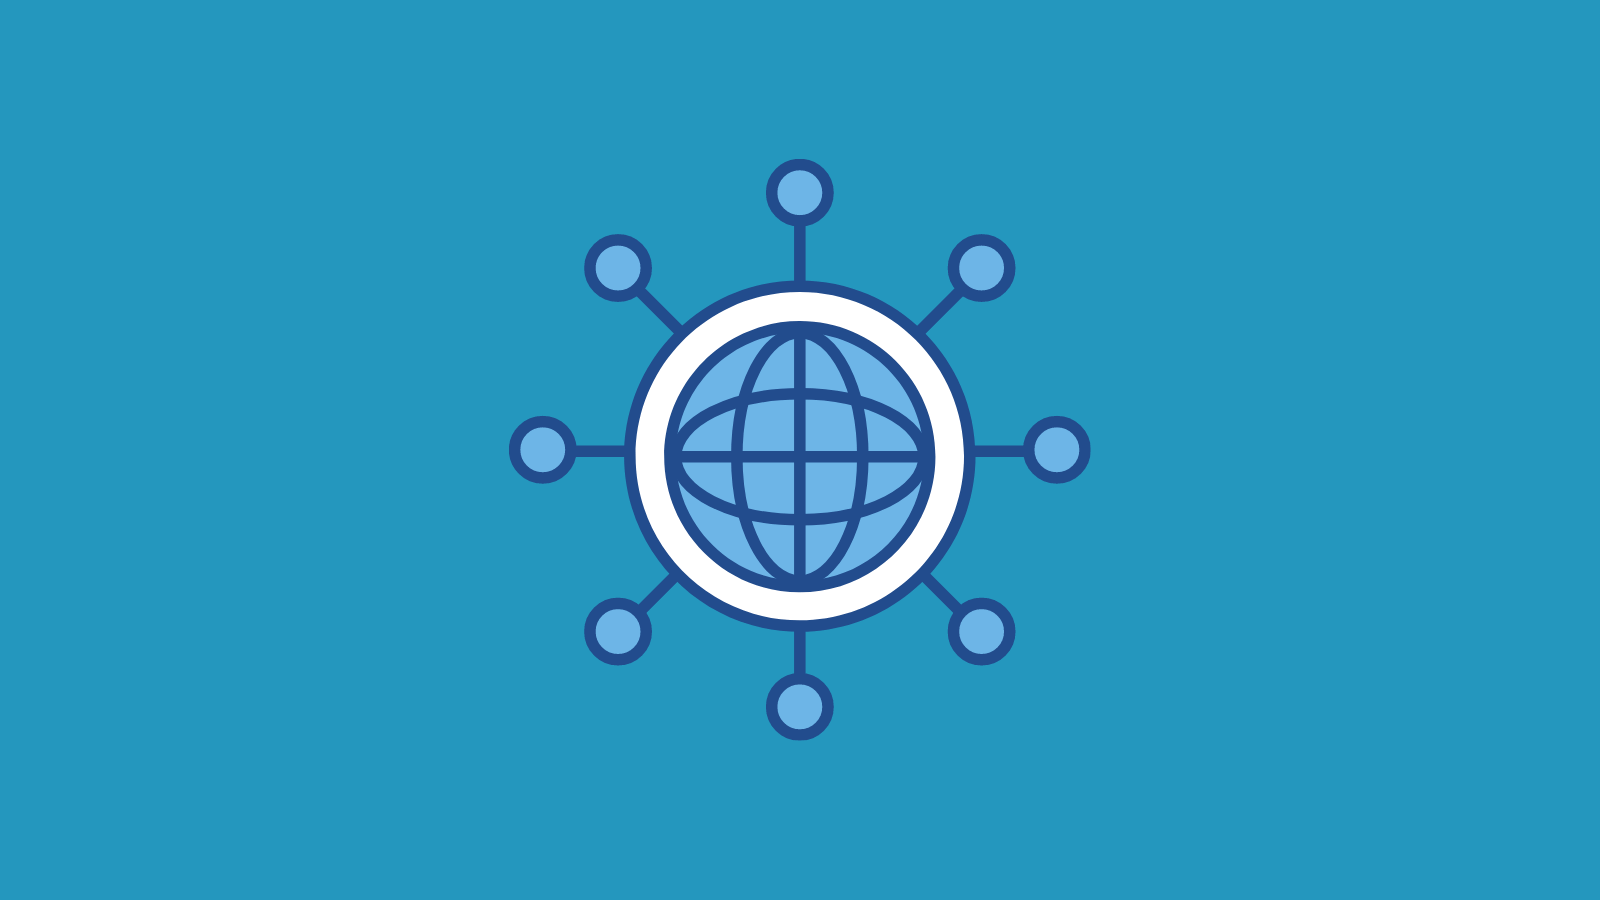 The world wide web symbol